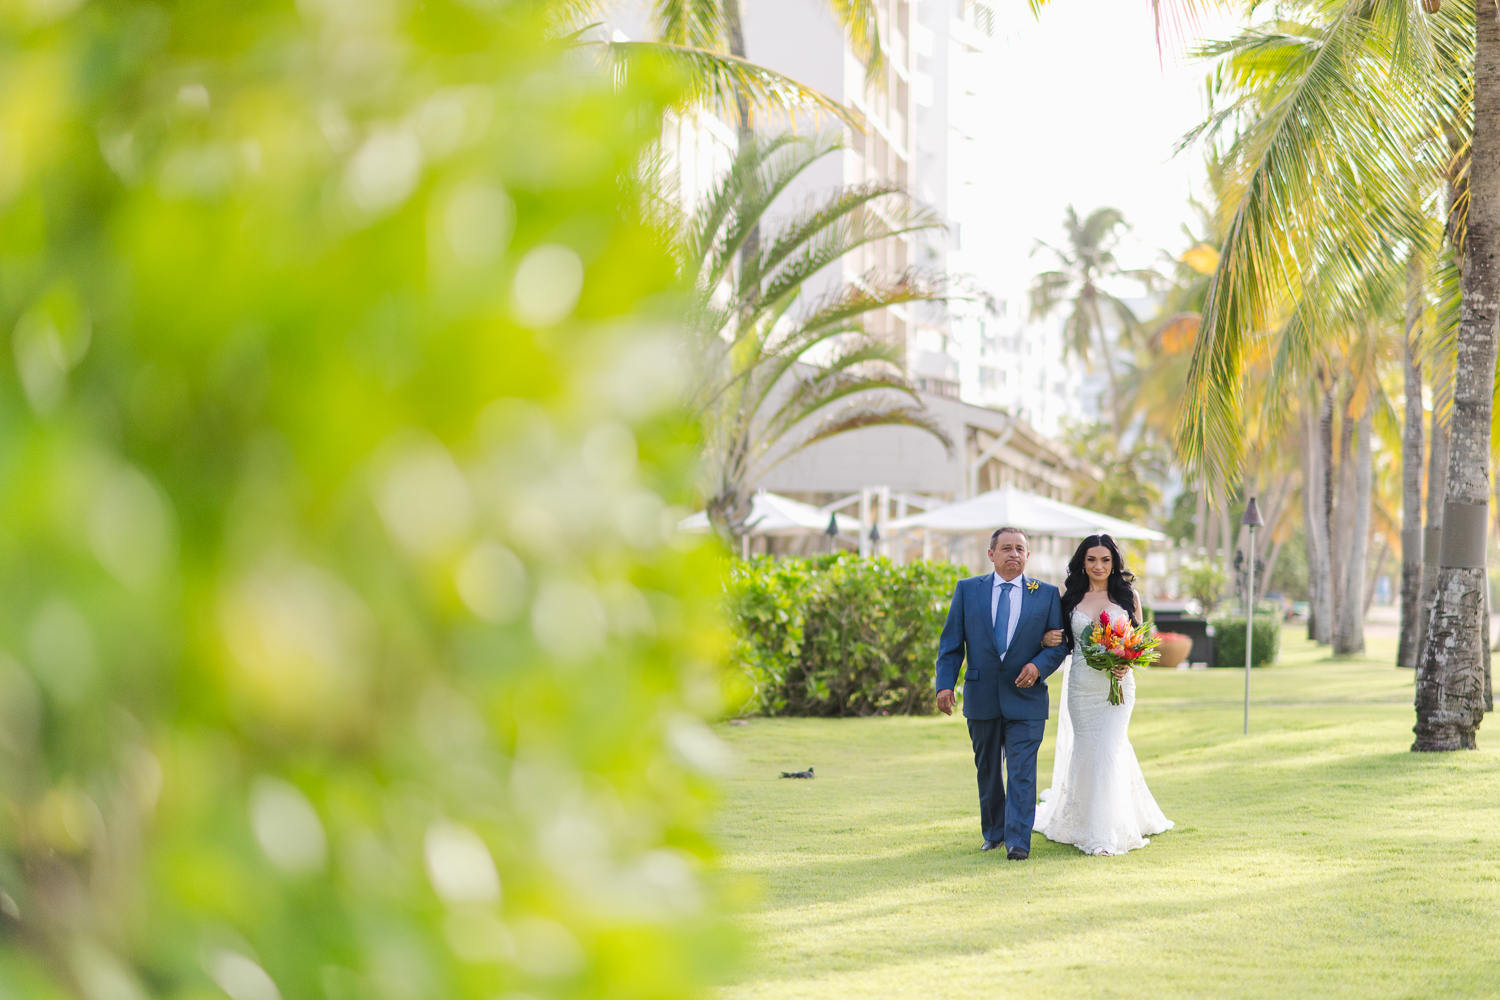 A dreamy beachfront micro wedding at Courtyard Marriott Hotel, followed by an al fresco reception at Las Brisas.